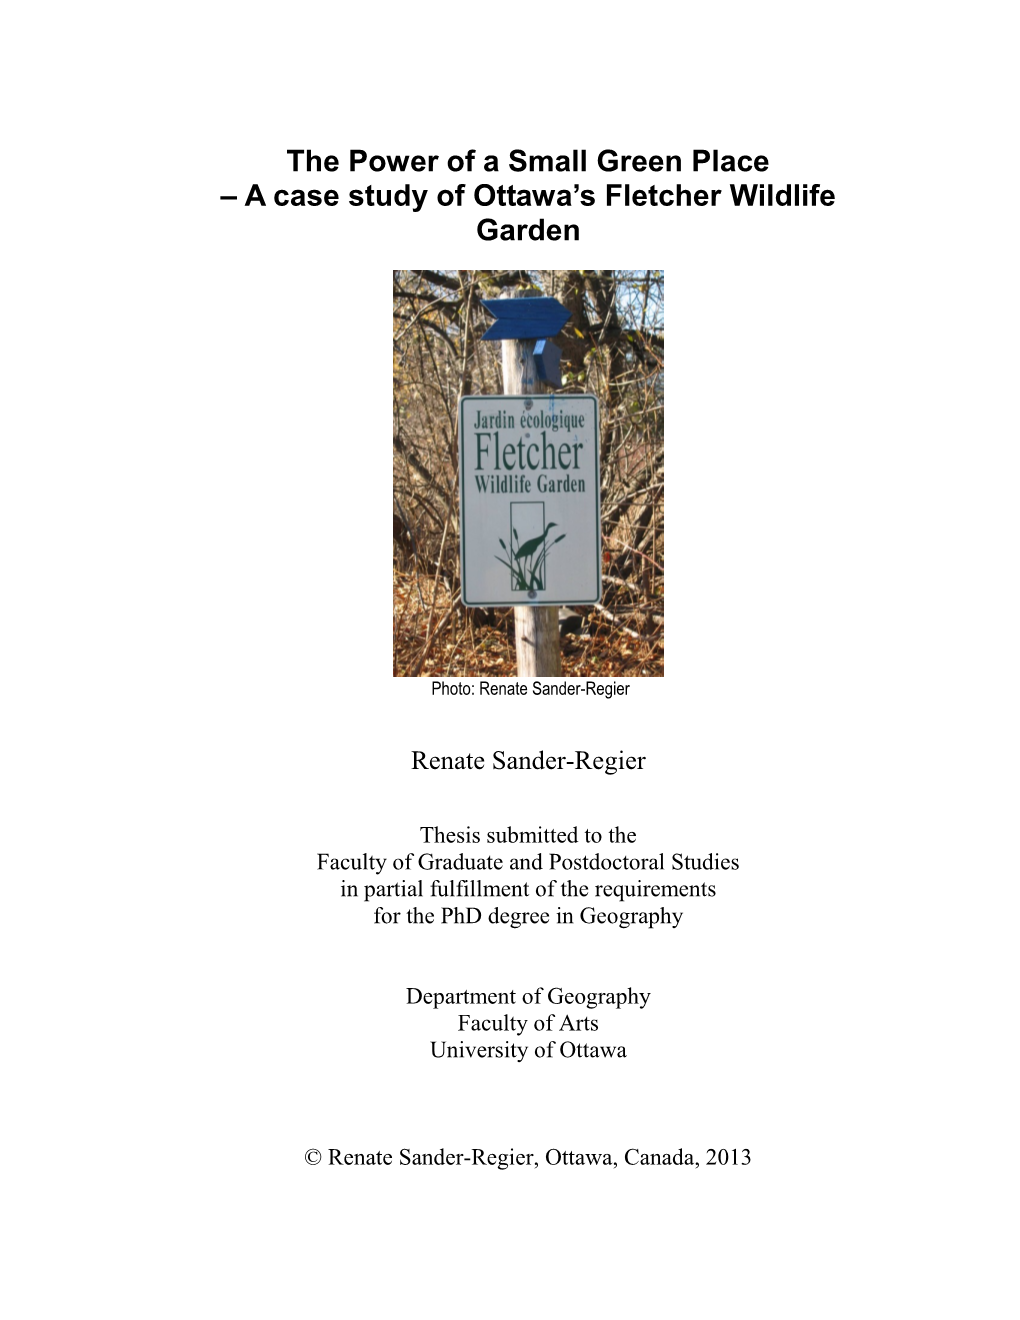 A Case Study of Ottawa's Fletcher Wildlife Garden